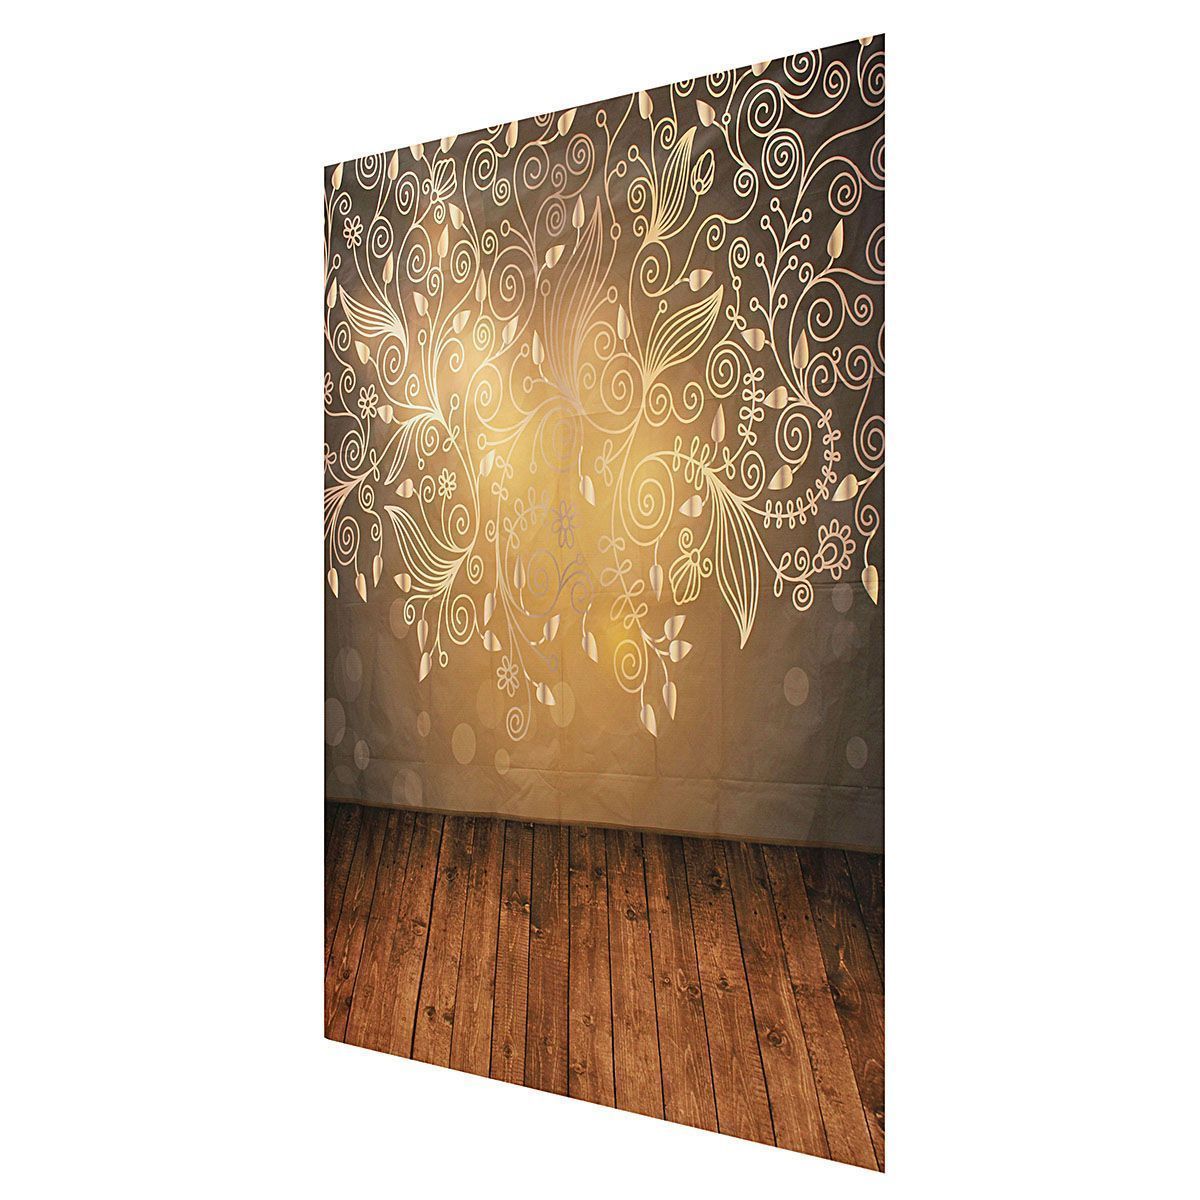 5x7ft-Vinyl-Wall-Wood-Floor-Photography-Backdrops-Photo-Studio-Background-Decor-1130347